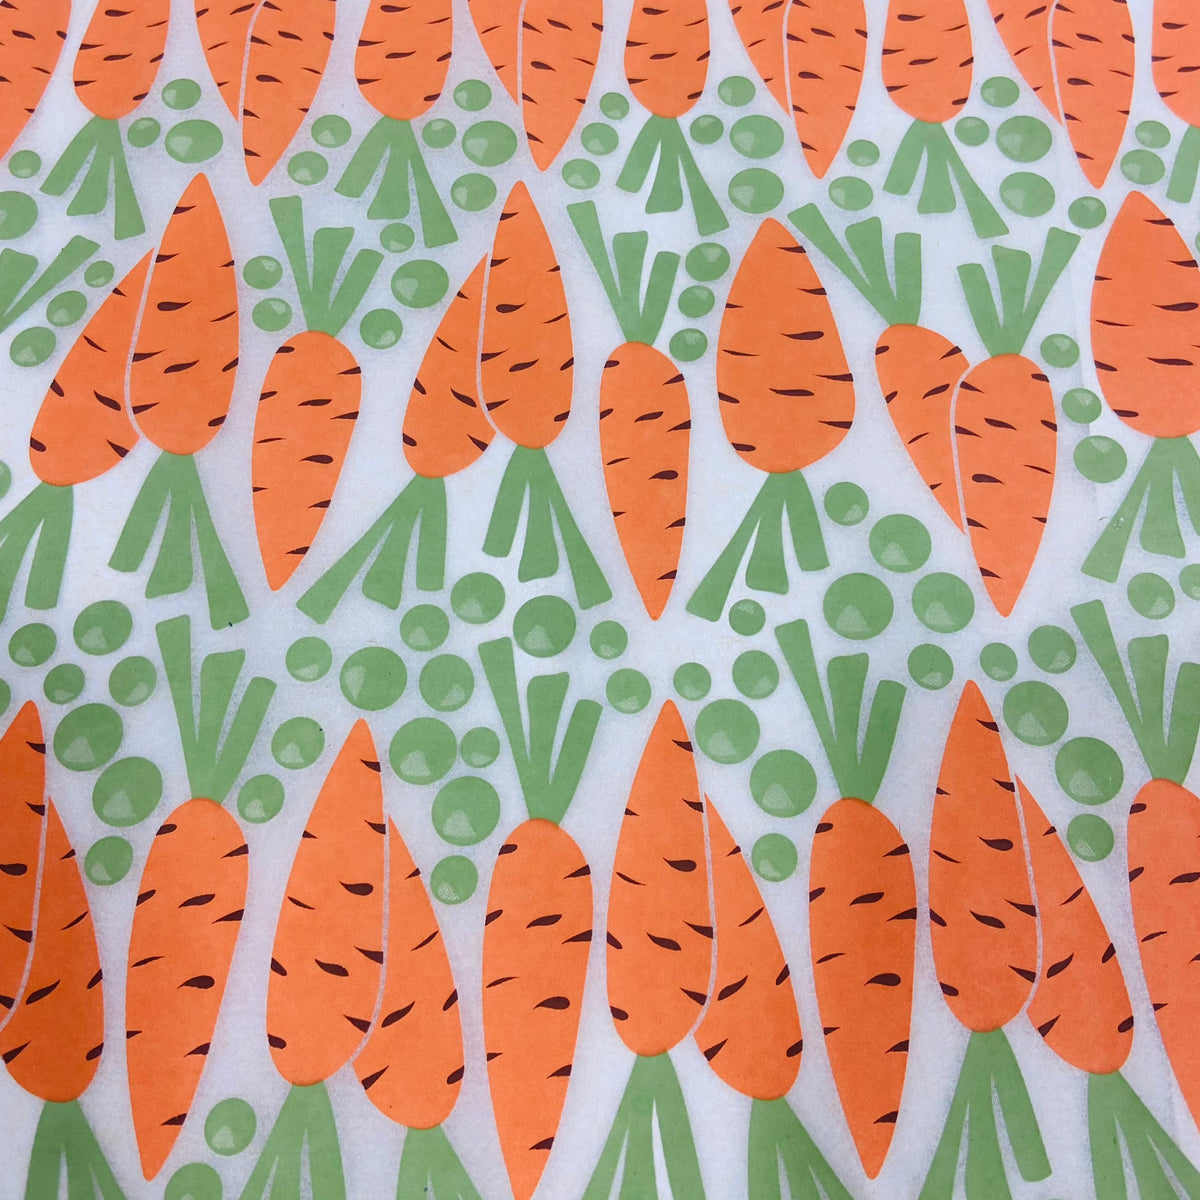 Peas and Carrots - Underglaze Transfer Sheet - Multi Colored